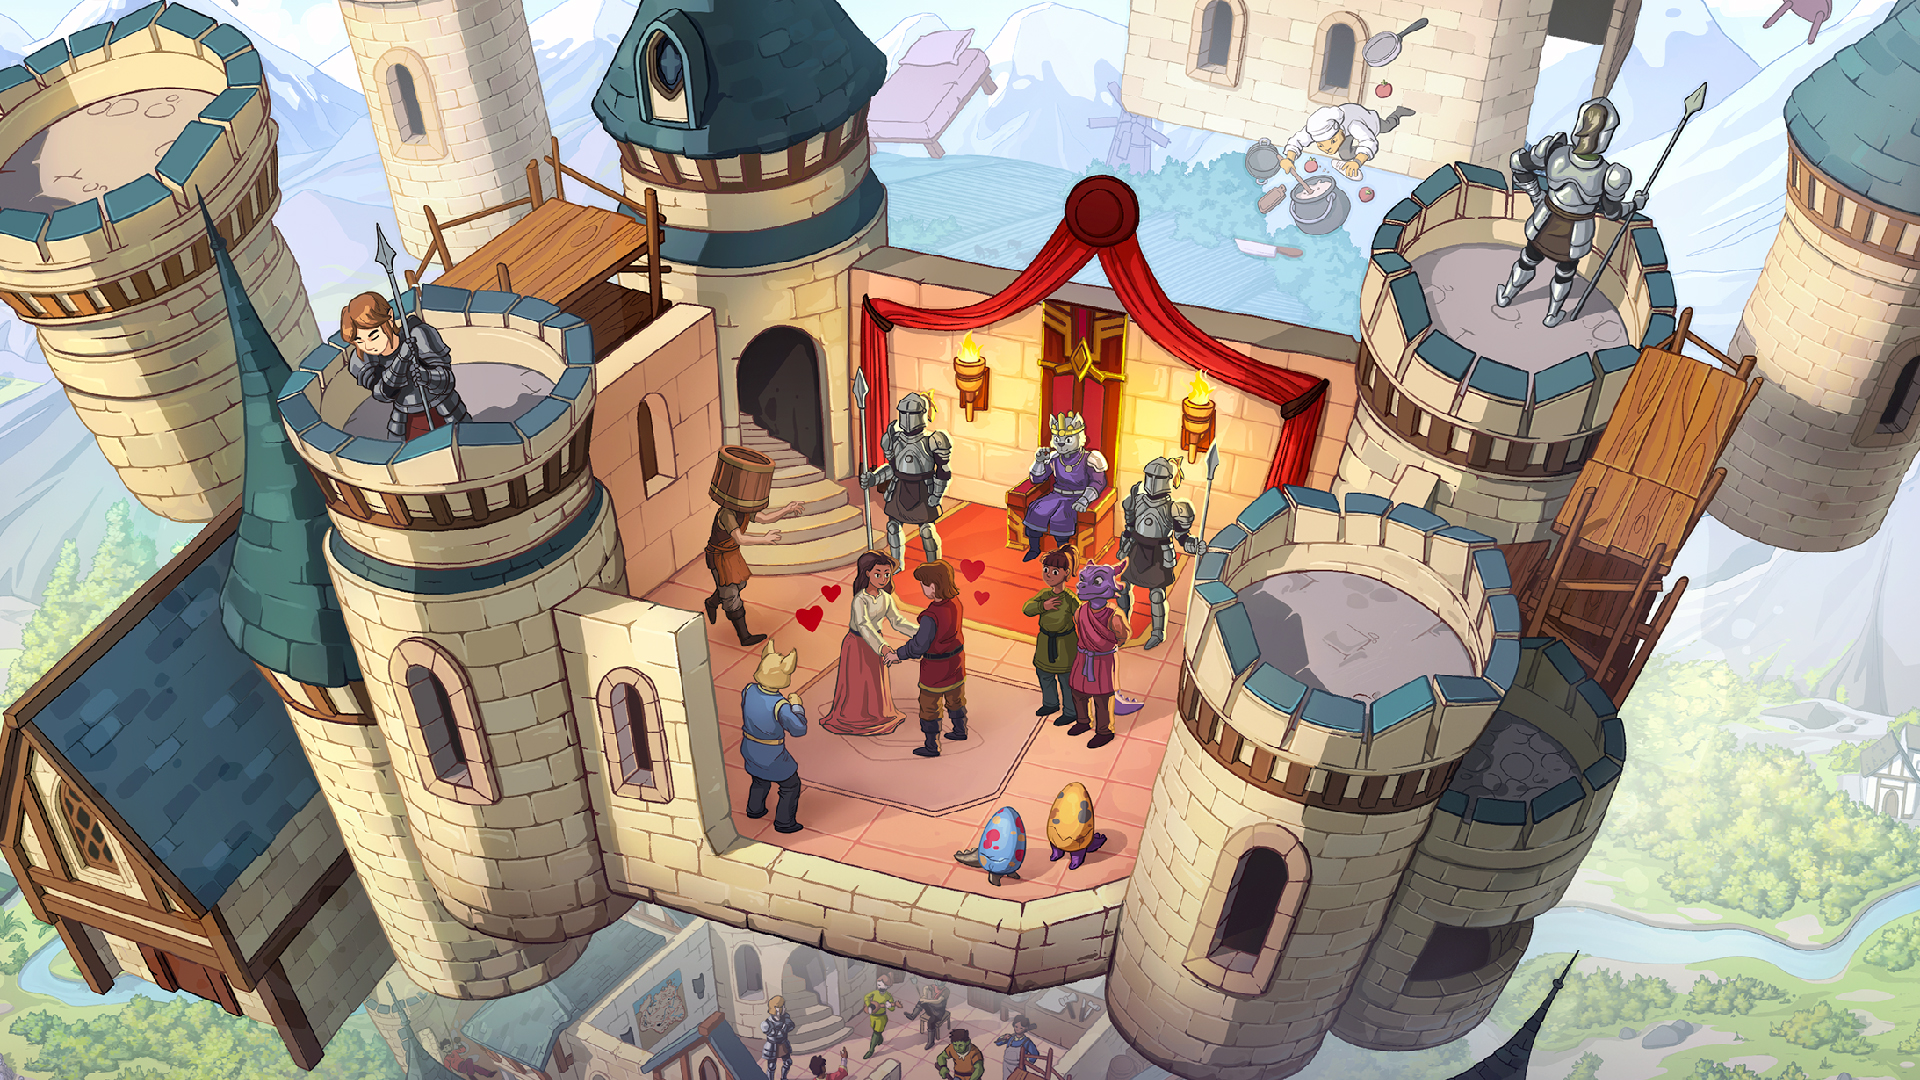 Artwork of The Elder Scrolls: Castles, featuring a wedding scene in a floating castle